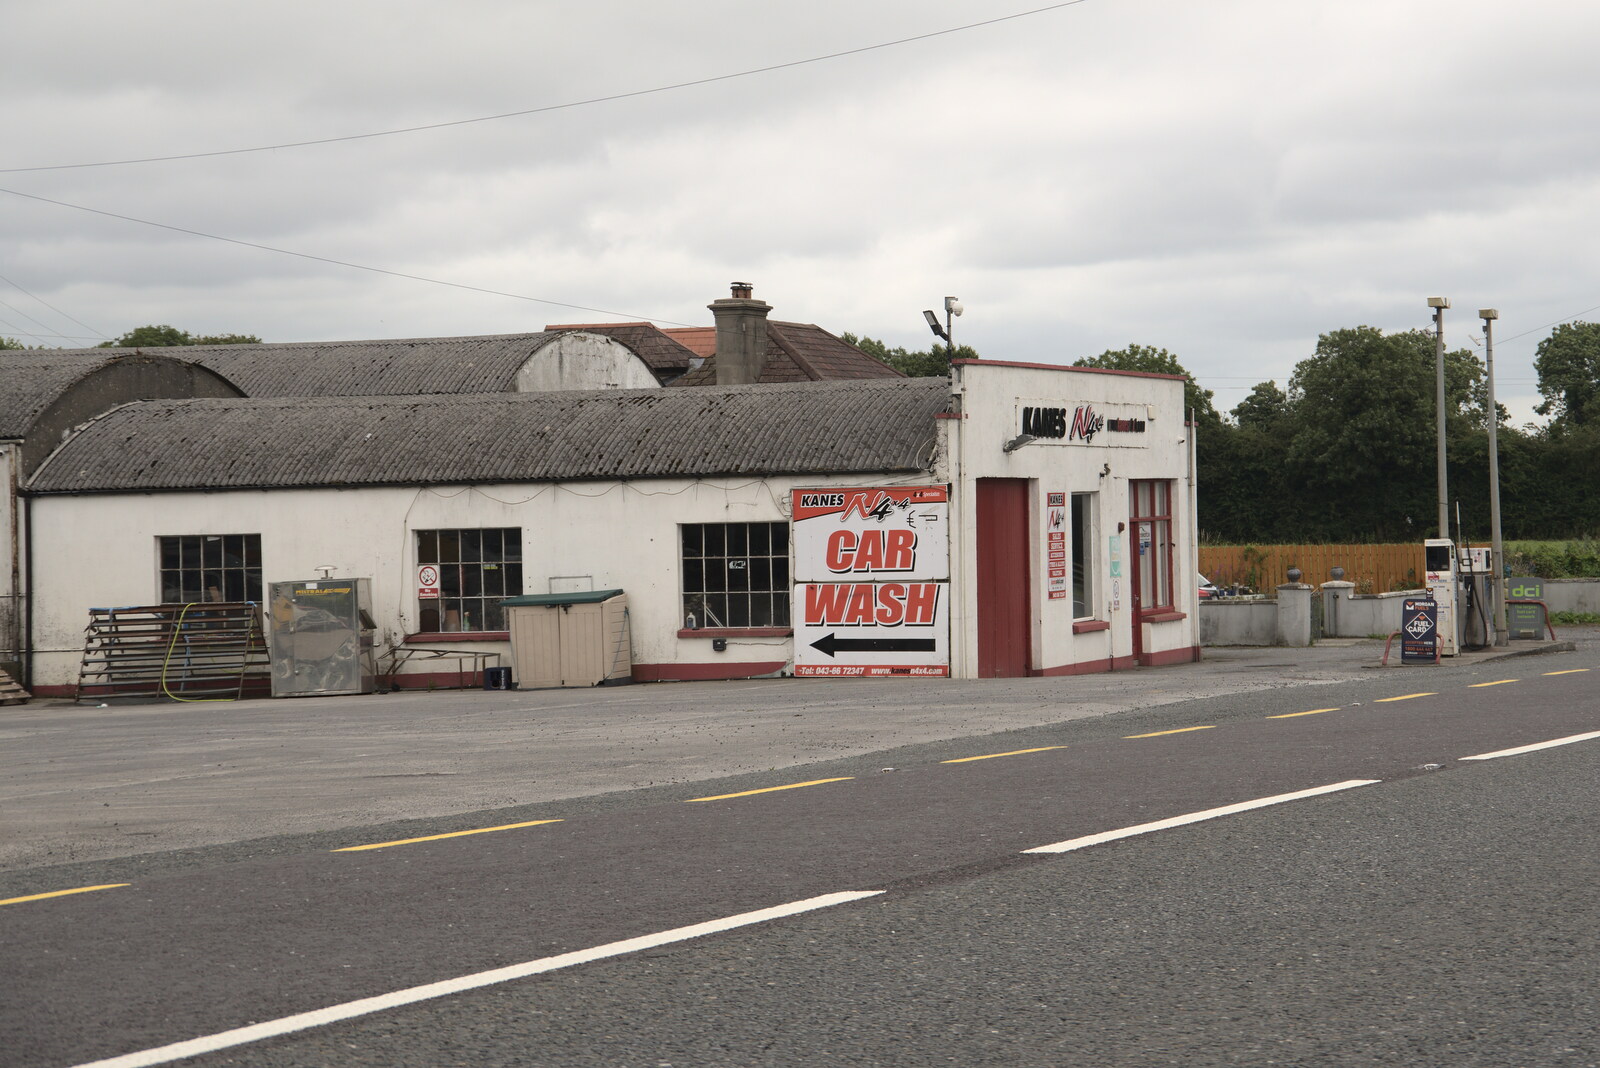 Pints of Guinness and Streedagh Beach, Grange and Sligo, Ireland - 9th August 2021: A cool old-school roadside petrol station